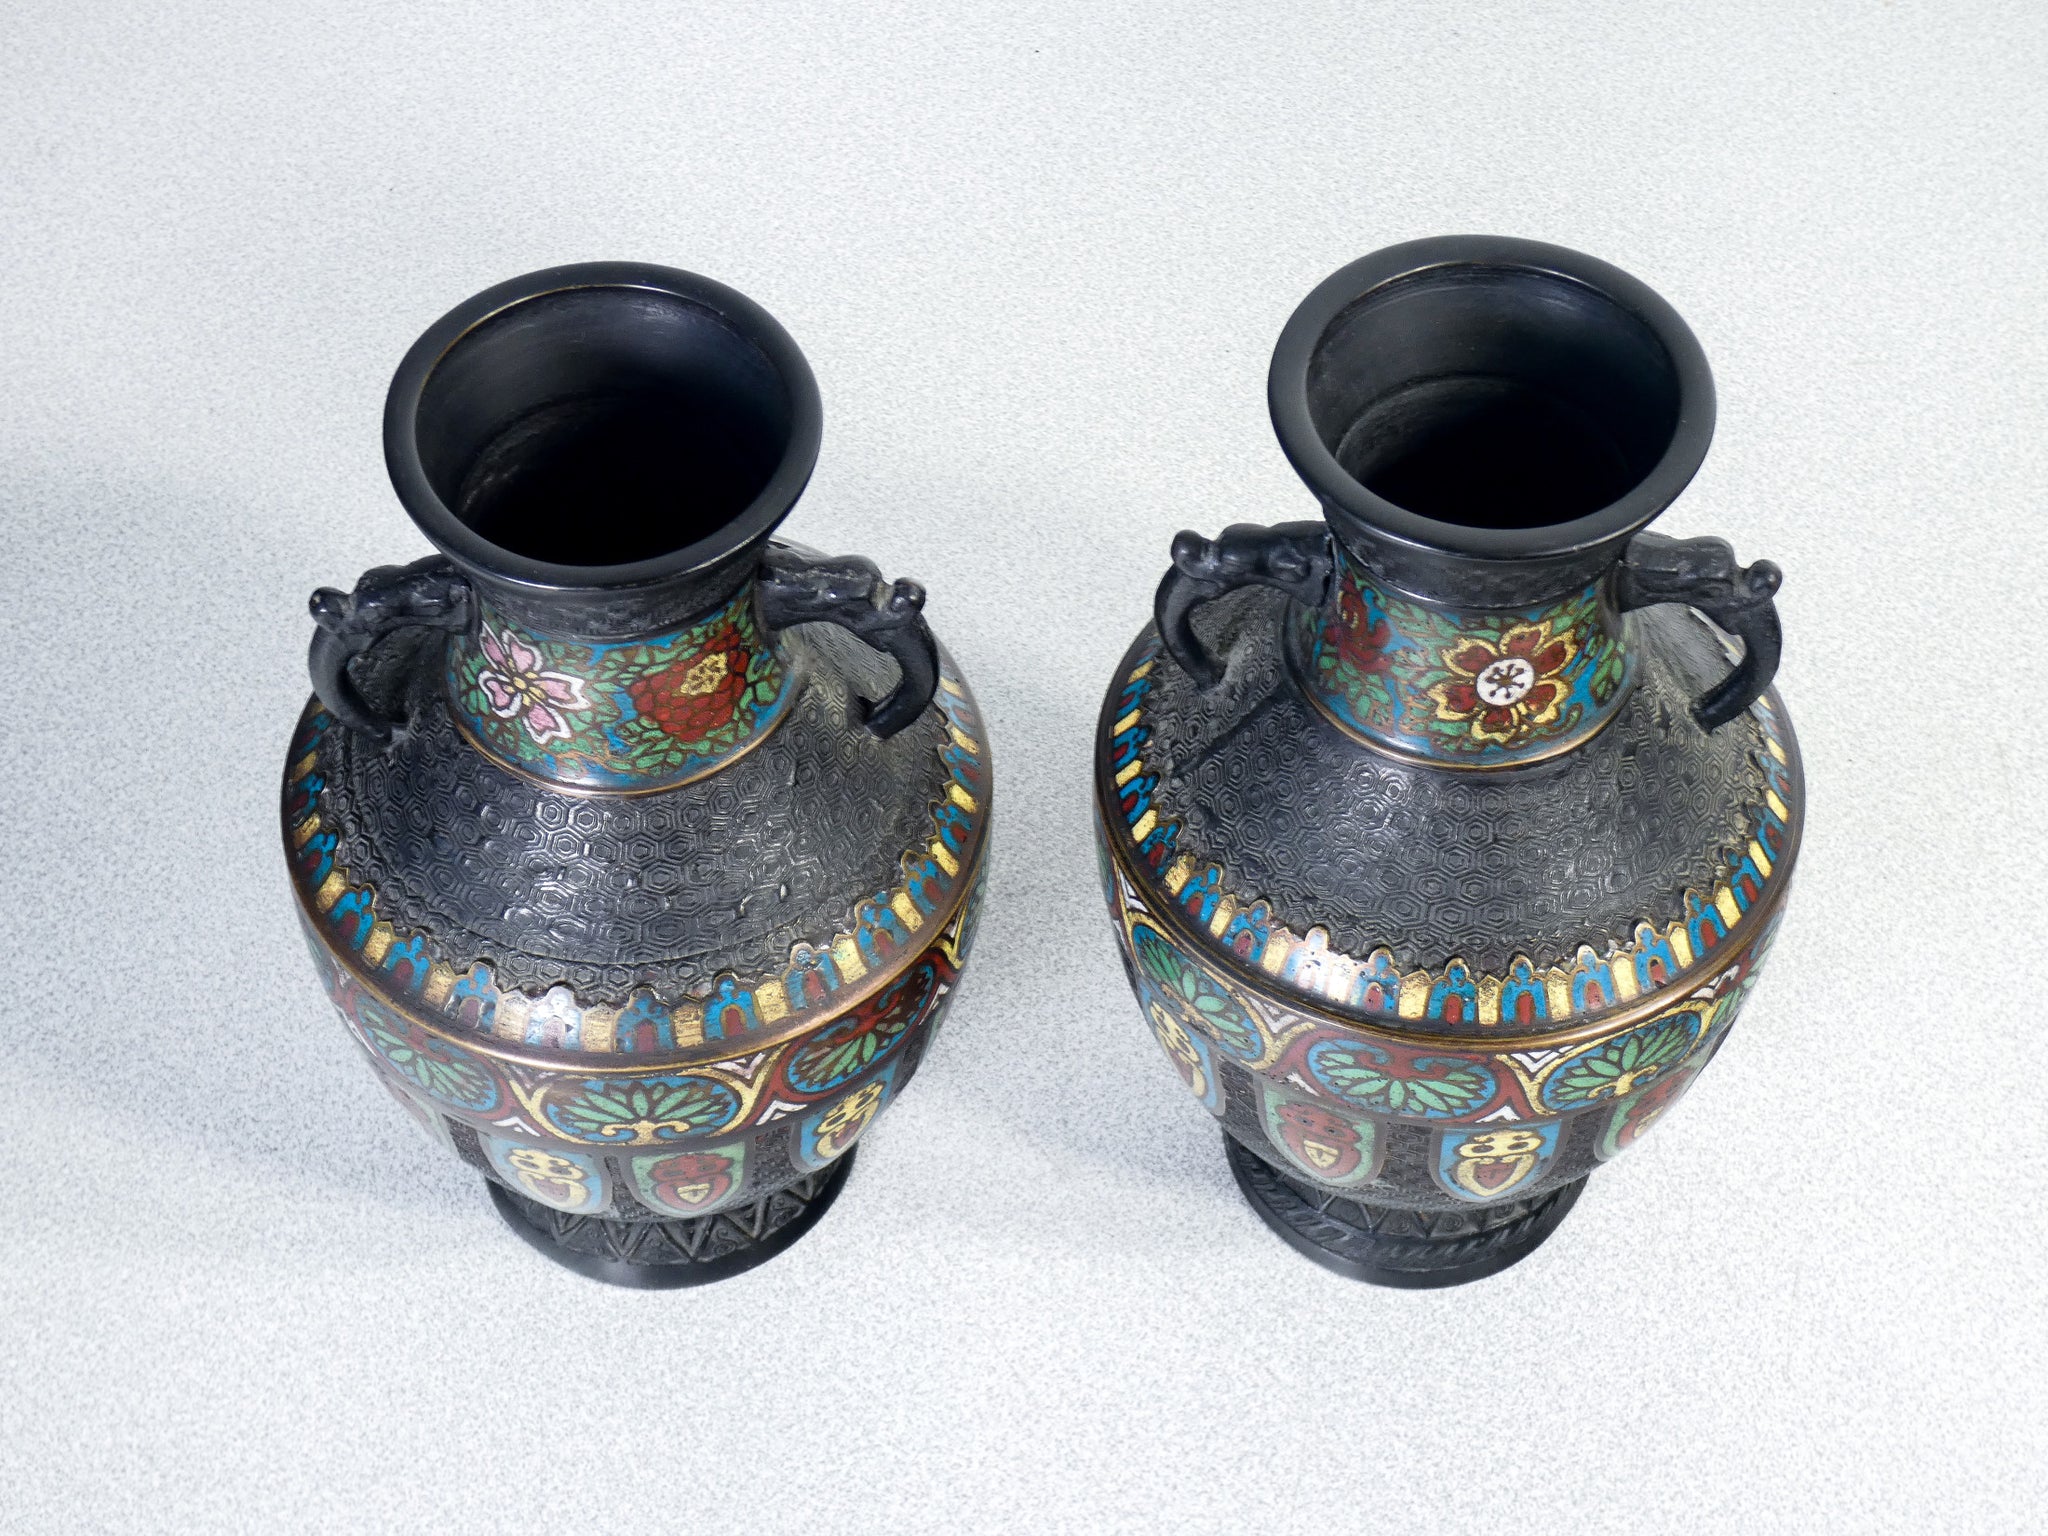 coppia vasi giappone champleve cloisonne bronzo smalto epoca xx sec antica